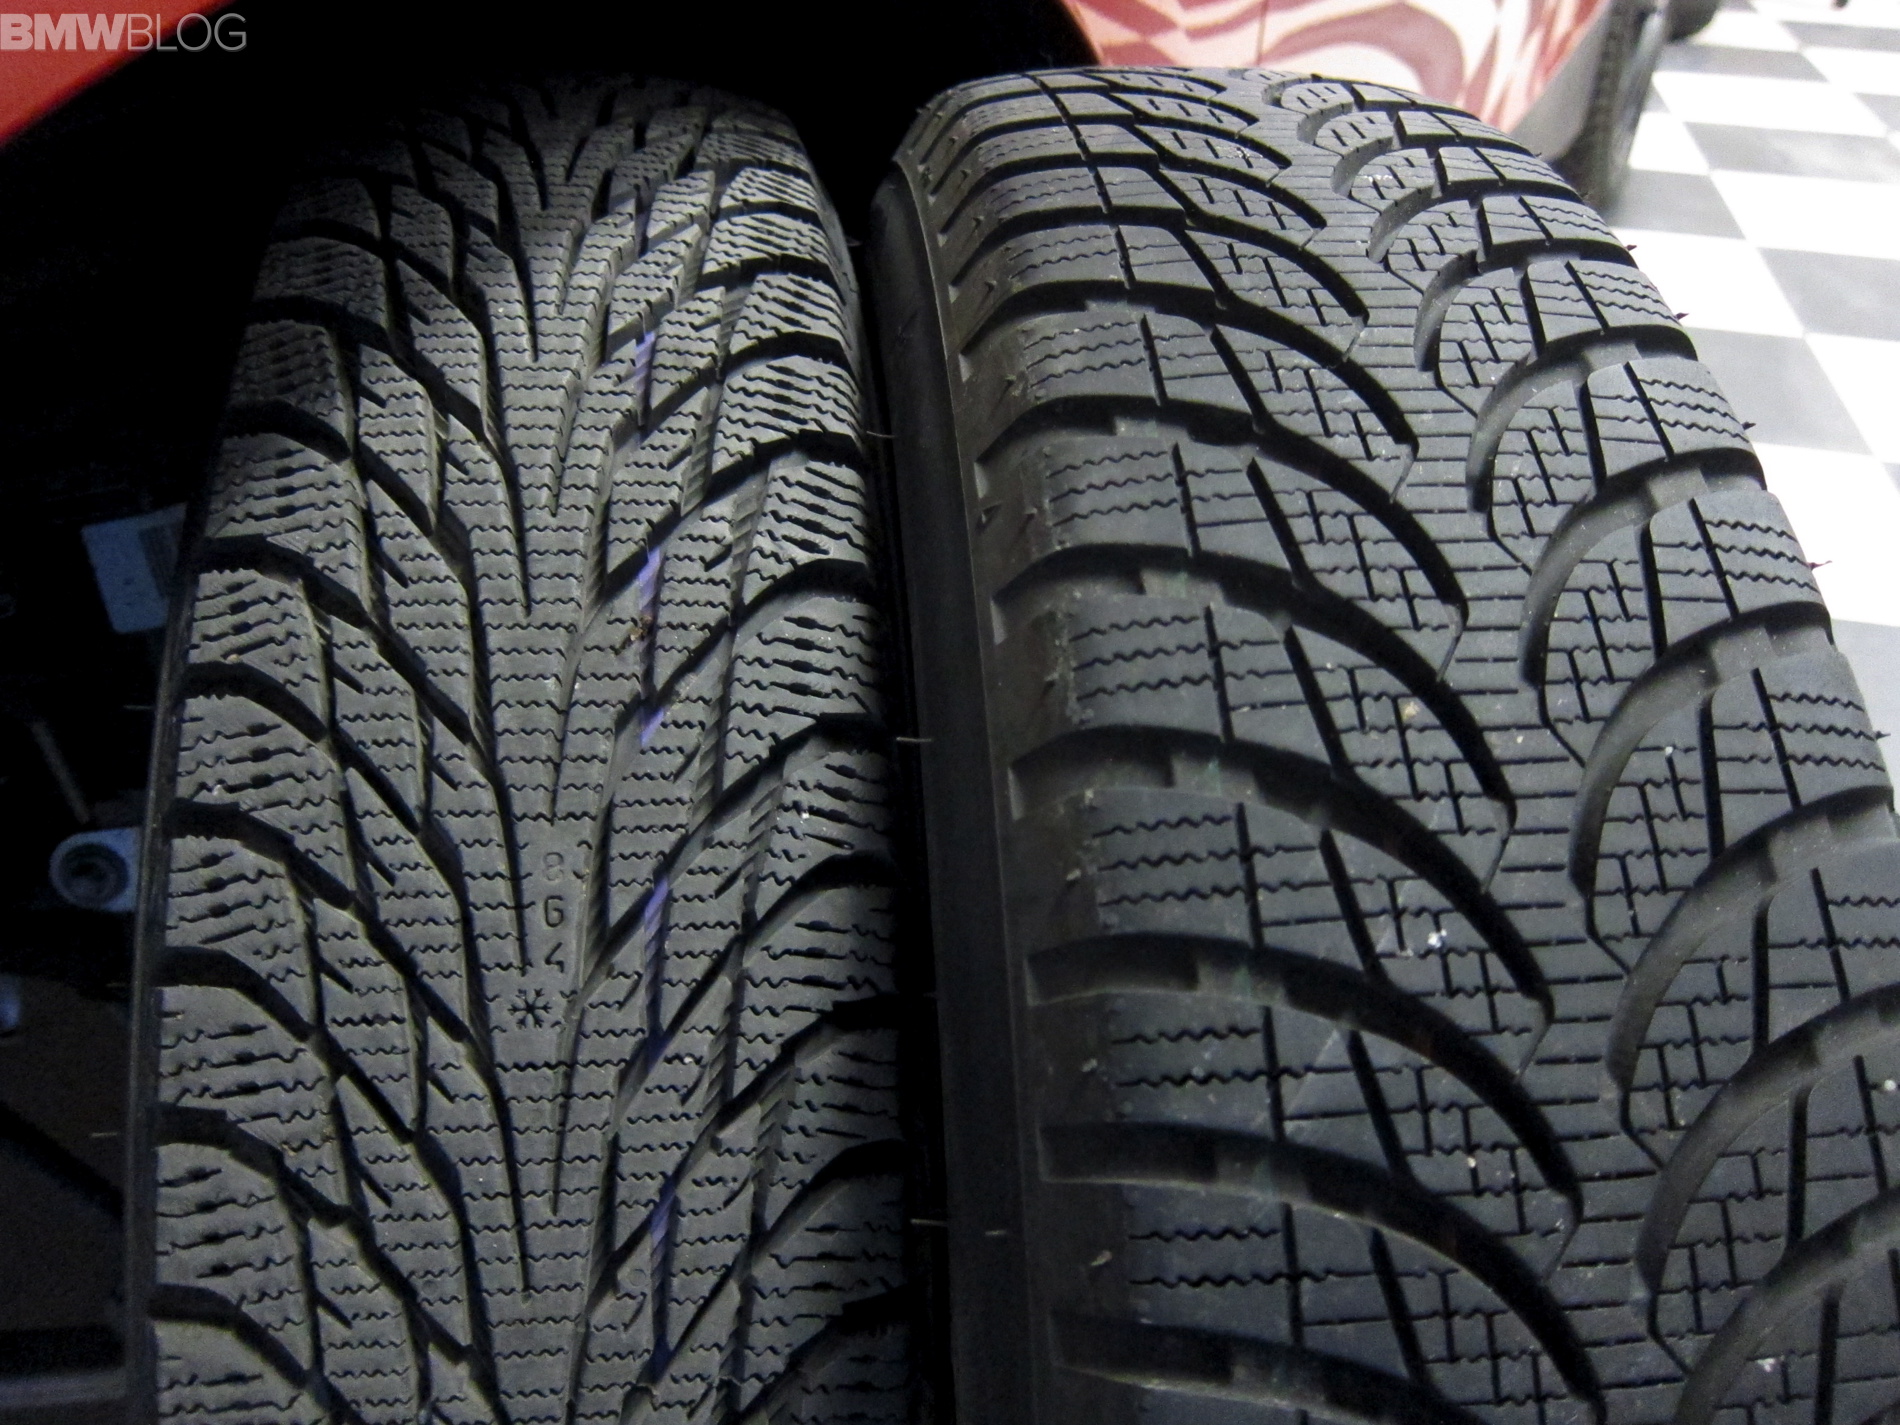 BMW i3 Winter Tires Review: Bridgestone LM-500 R2 vs. Nokian Blizzak Hakkapeliitta